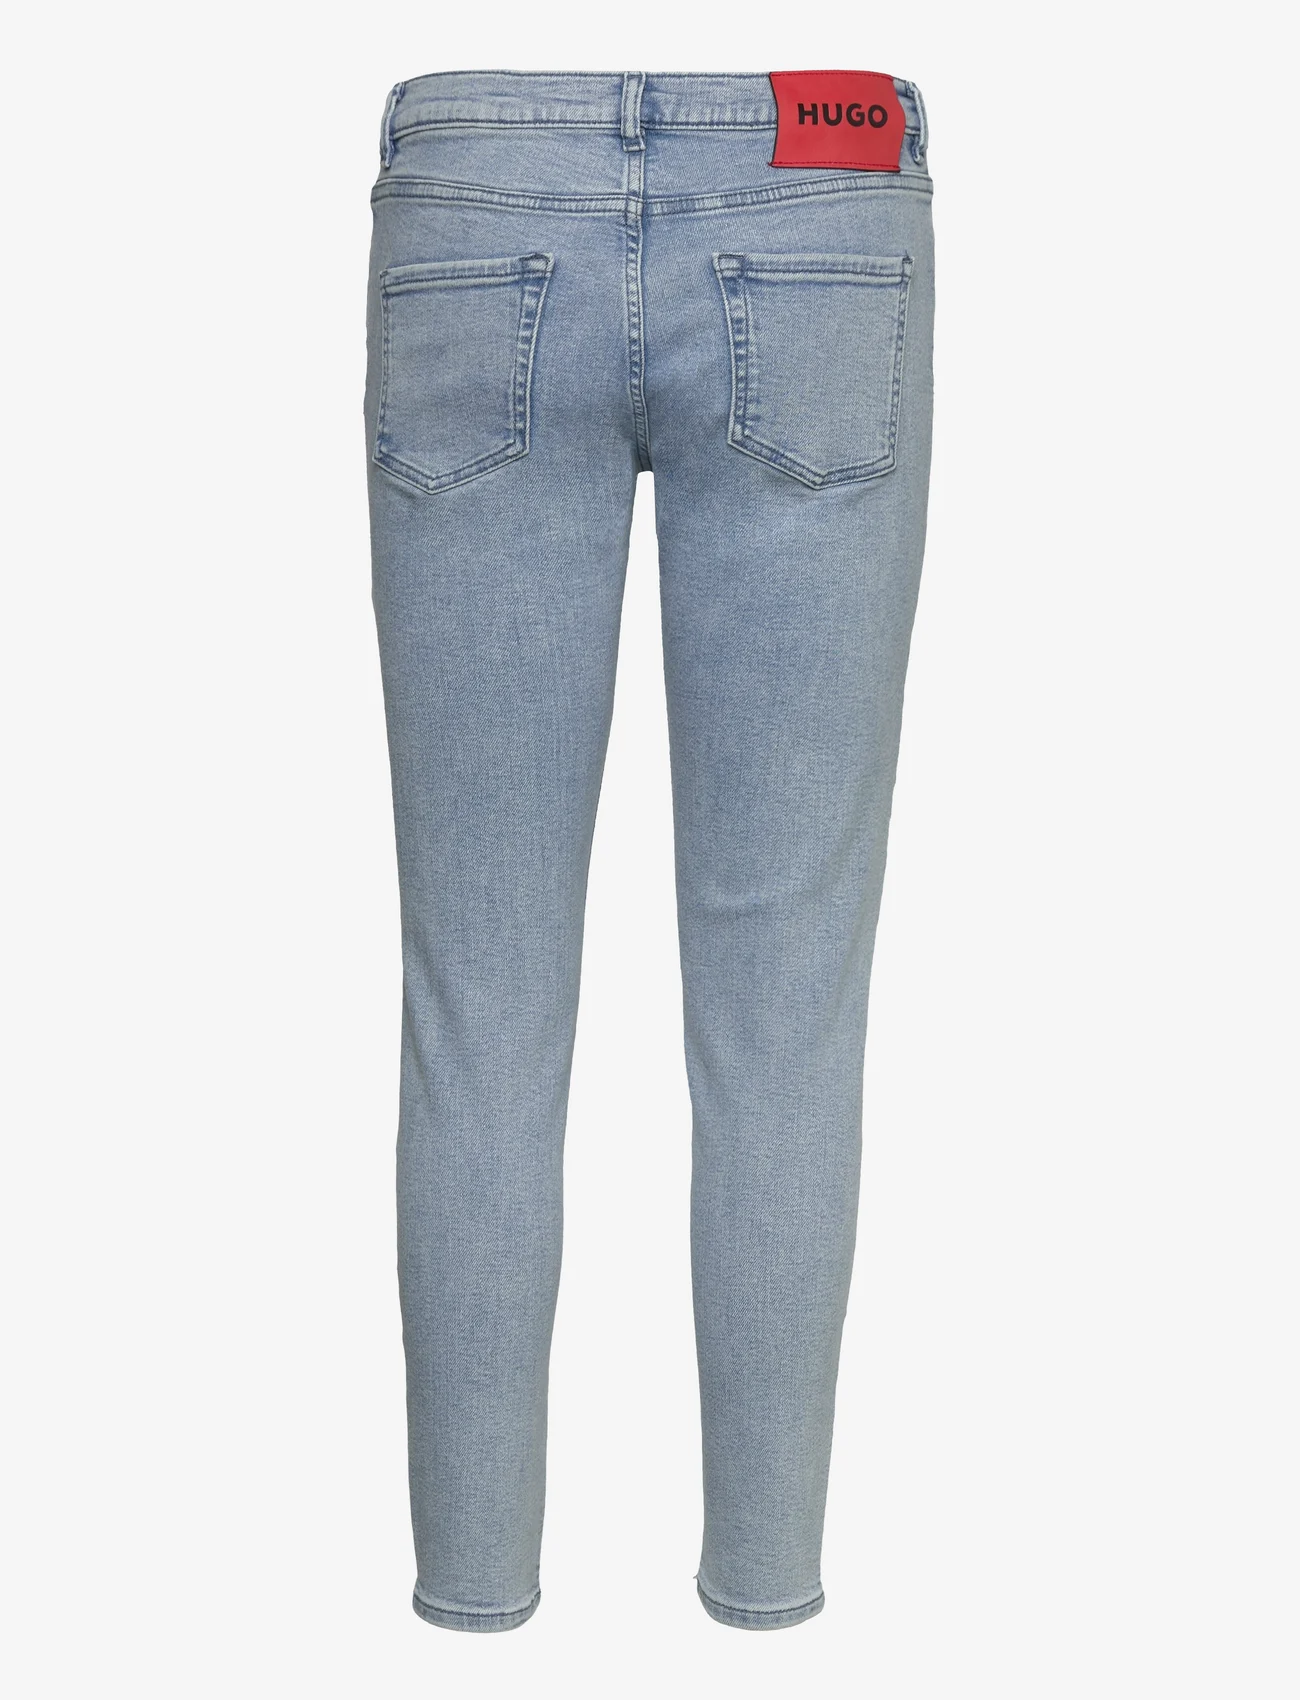 HUGO - 932 - slim fit jeans - turquoise/aqua - 1